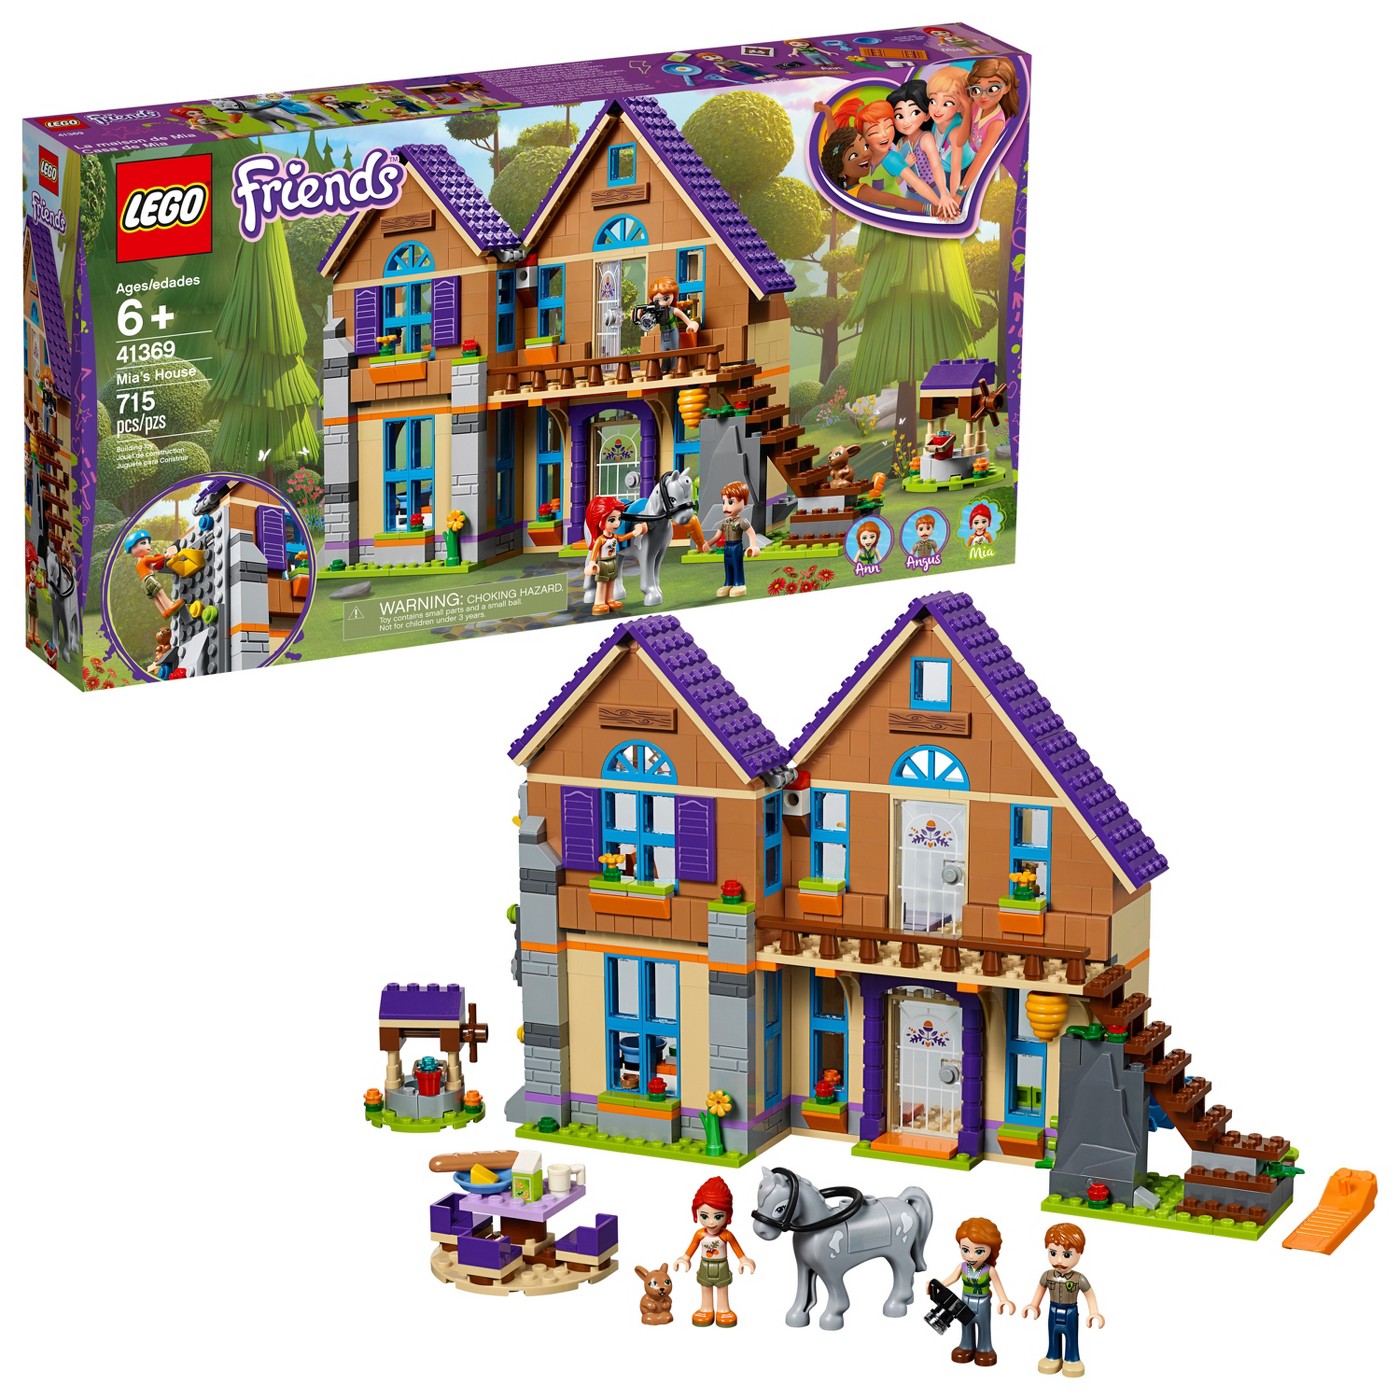 LEGO Friends Mia's House 41369 - image 1 of 7